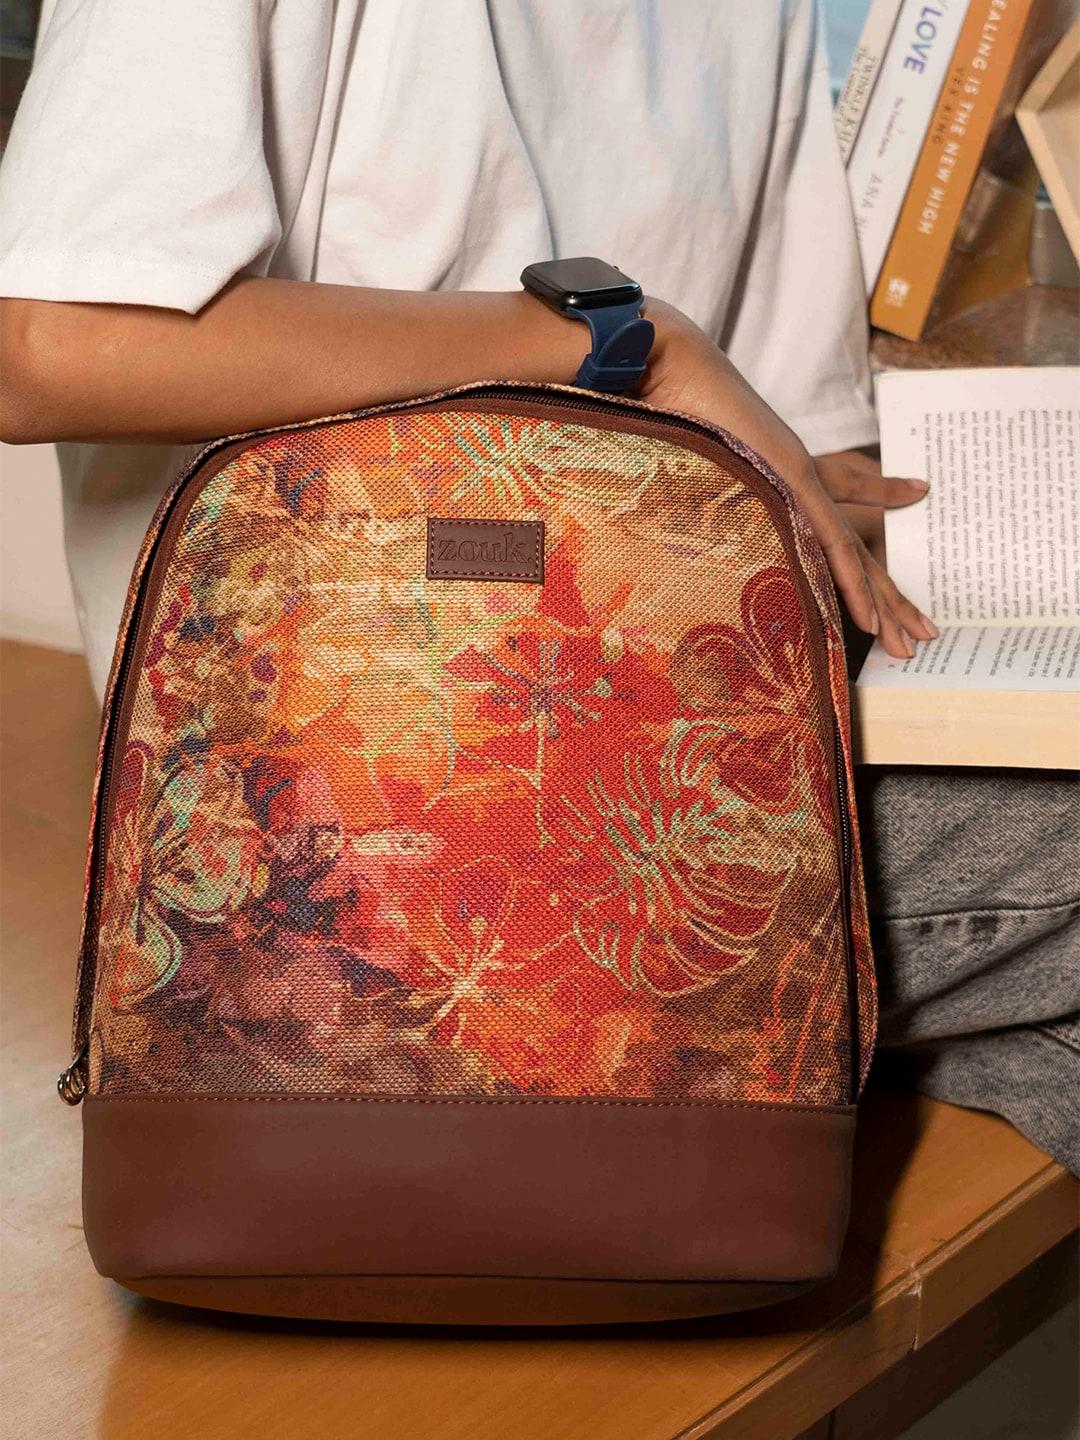 zouk floral printed backpack